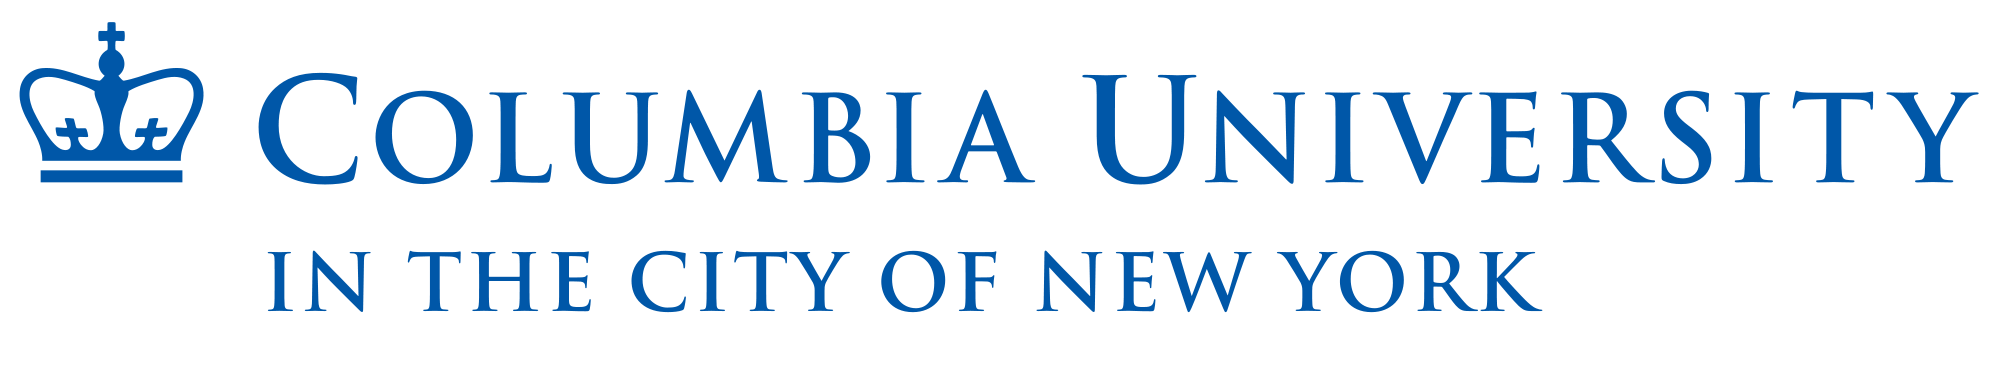 Columbia University Logo photo - 1